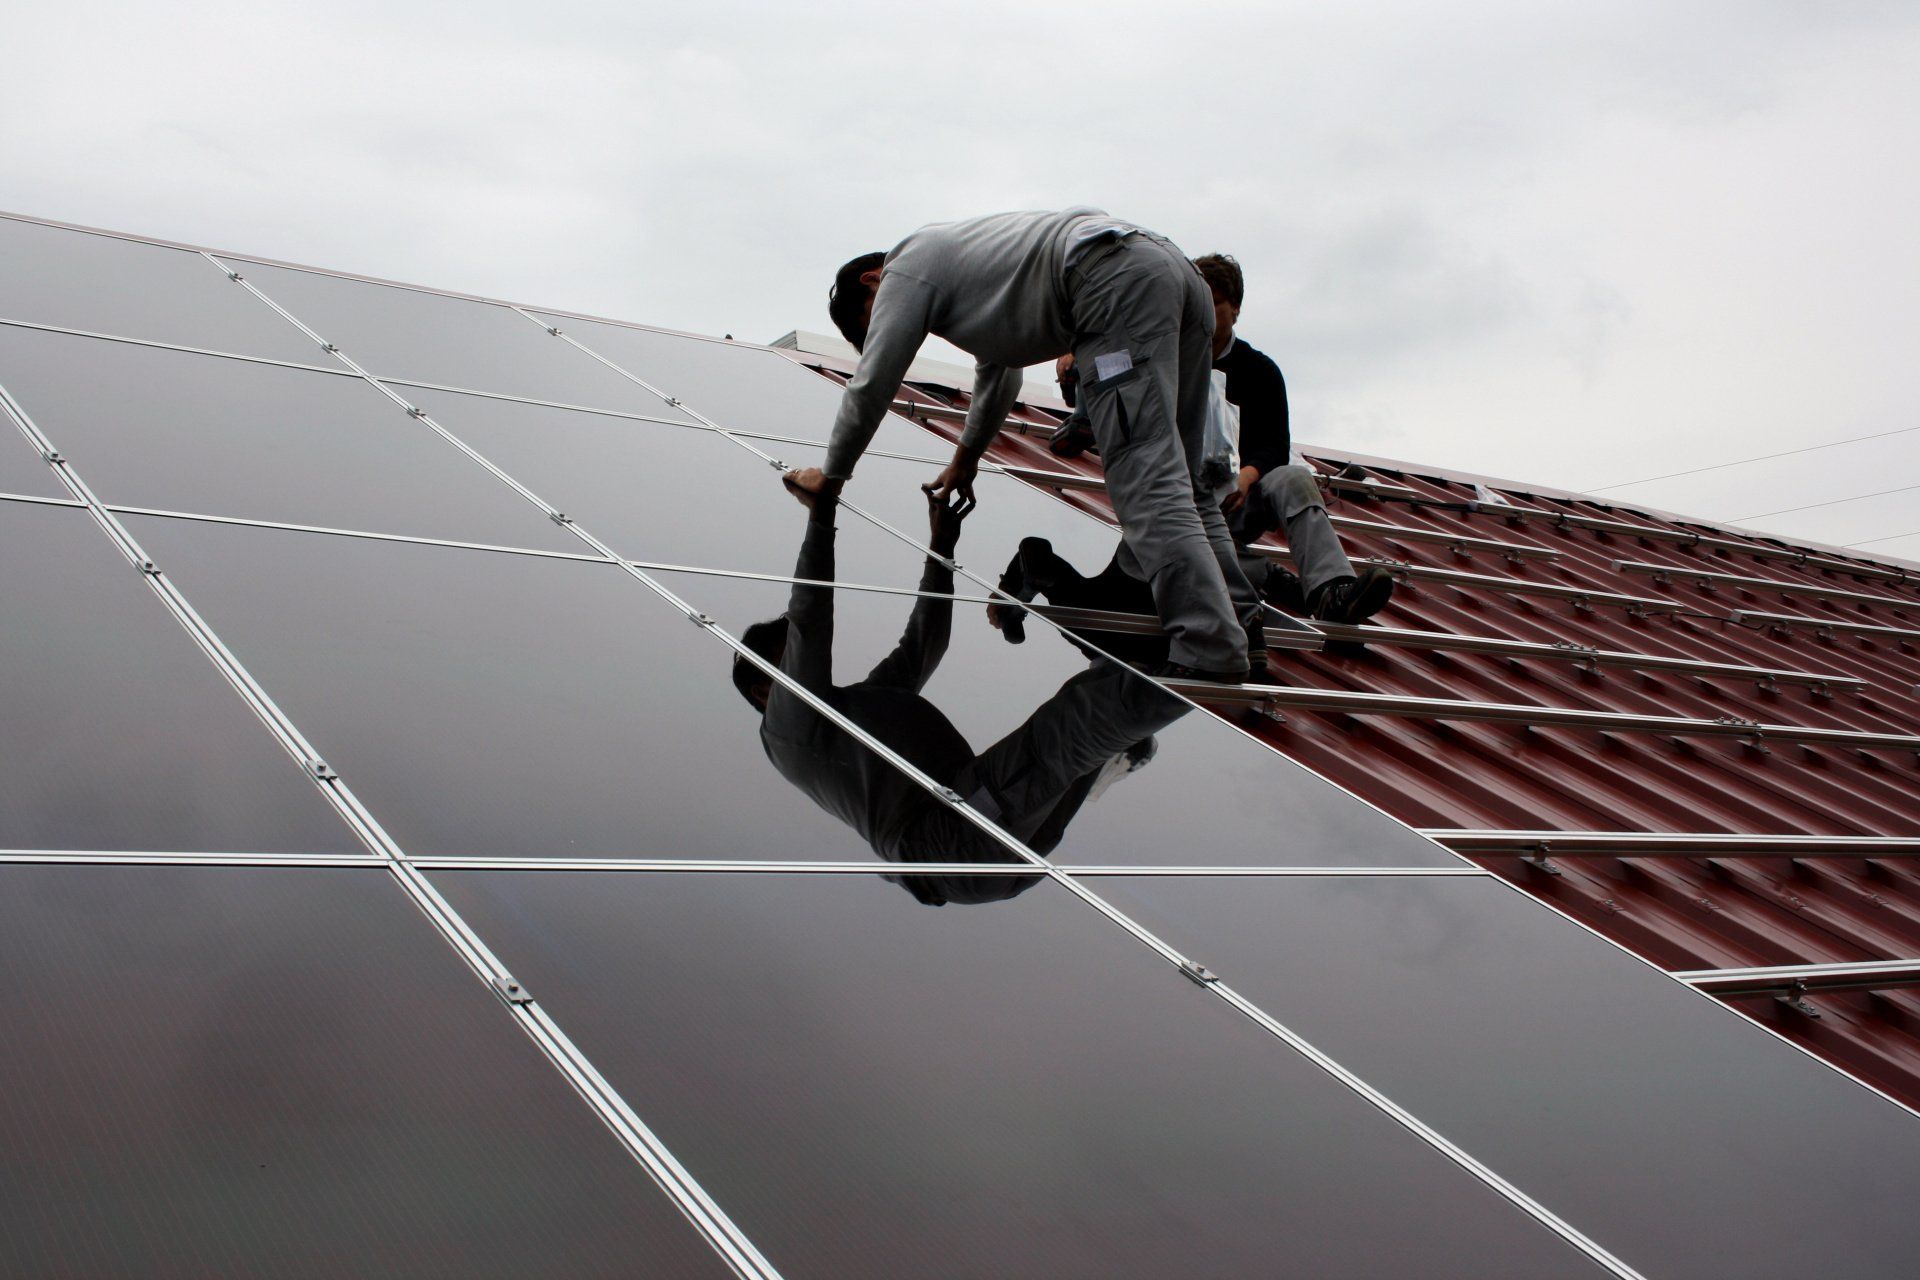 installing solar panels on roof - Custom farm & rural sheds